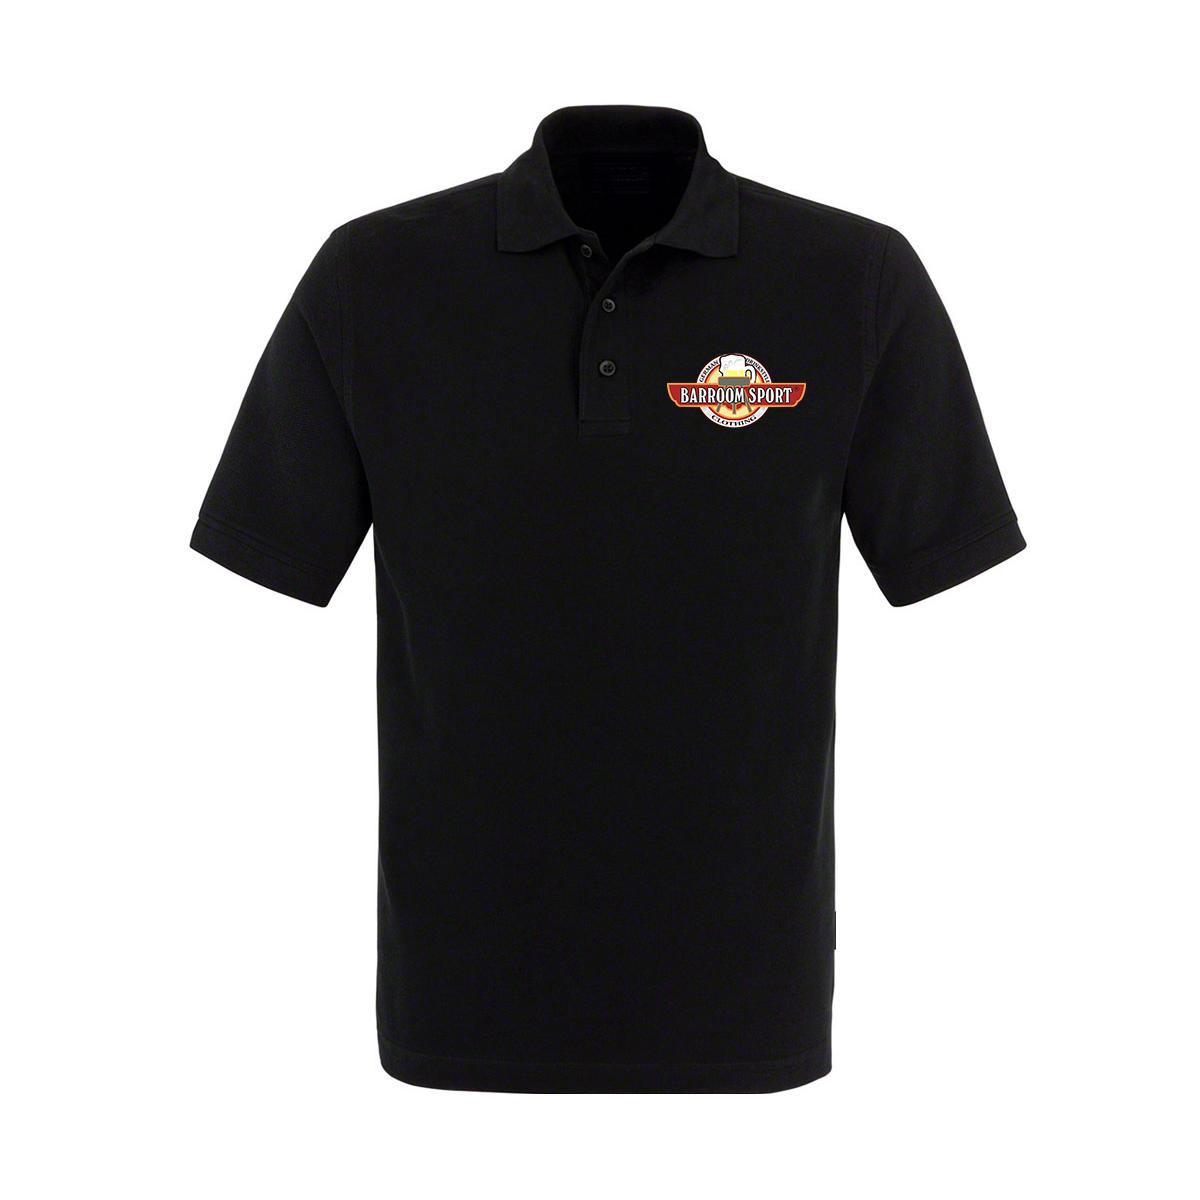 Barroom Sport - Männer Polo Shirt - Dick und Durstig - schwarz